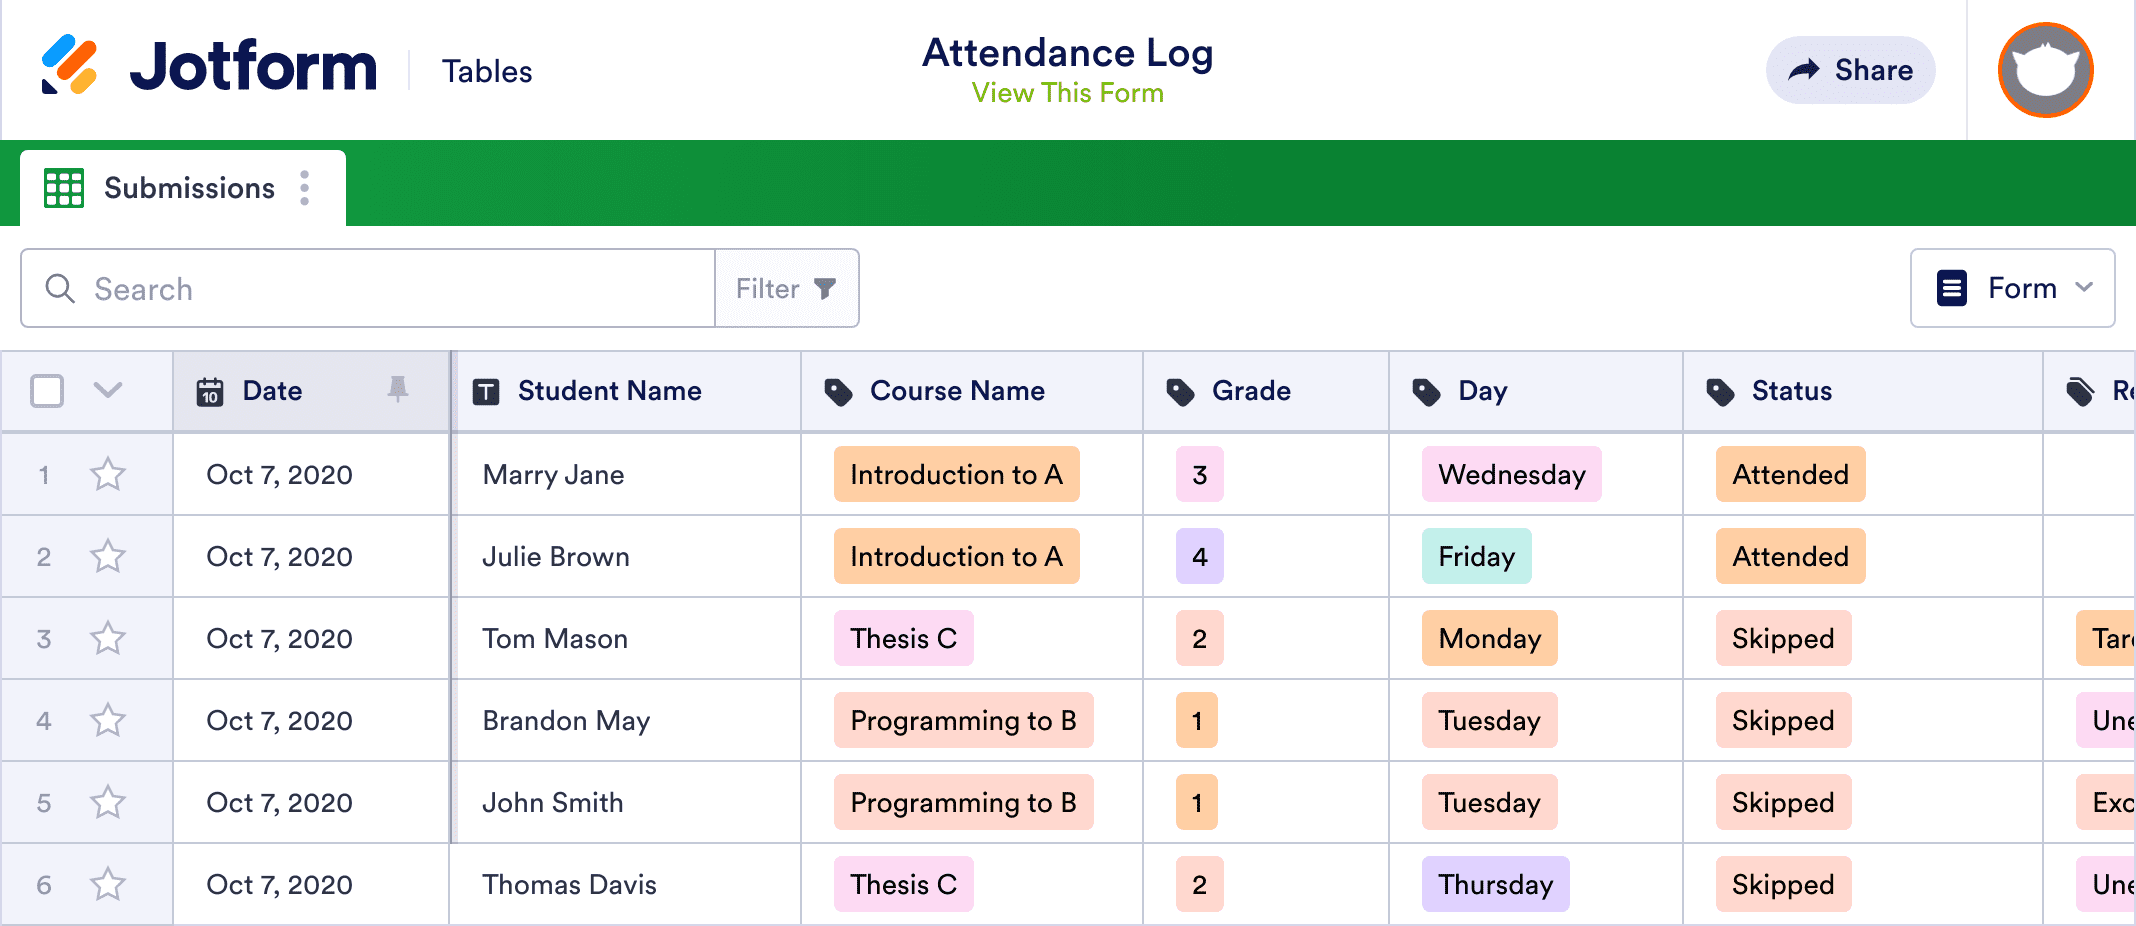 Attendance Log Template | Jotform Tables